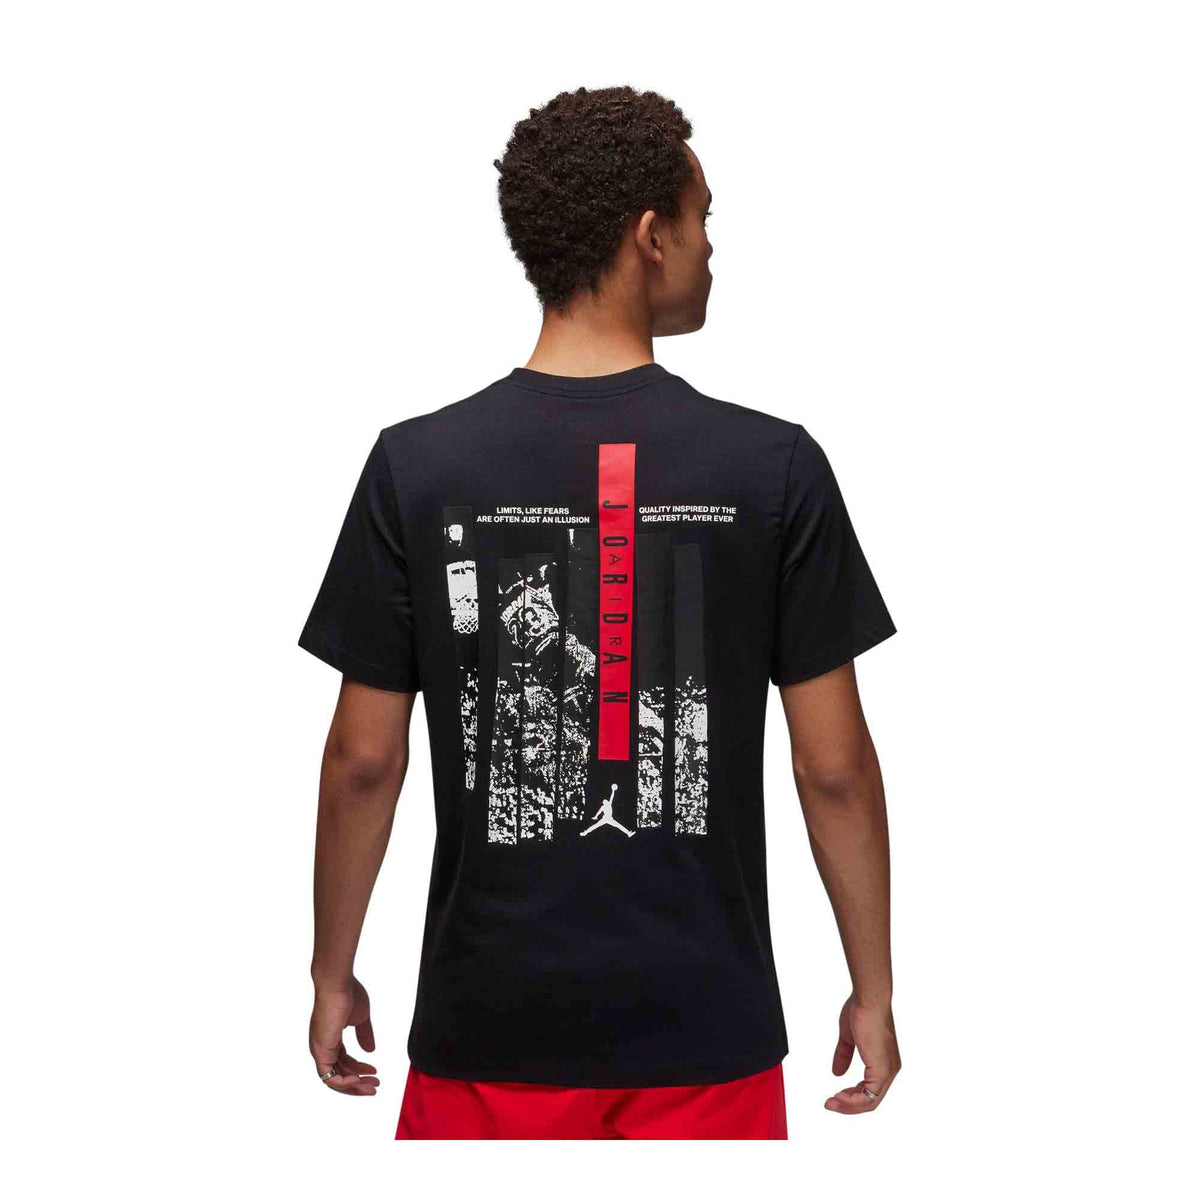 Jordan Brand Men's Graphic T-Shirt